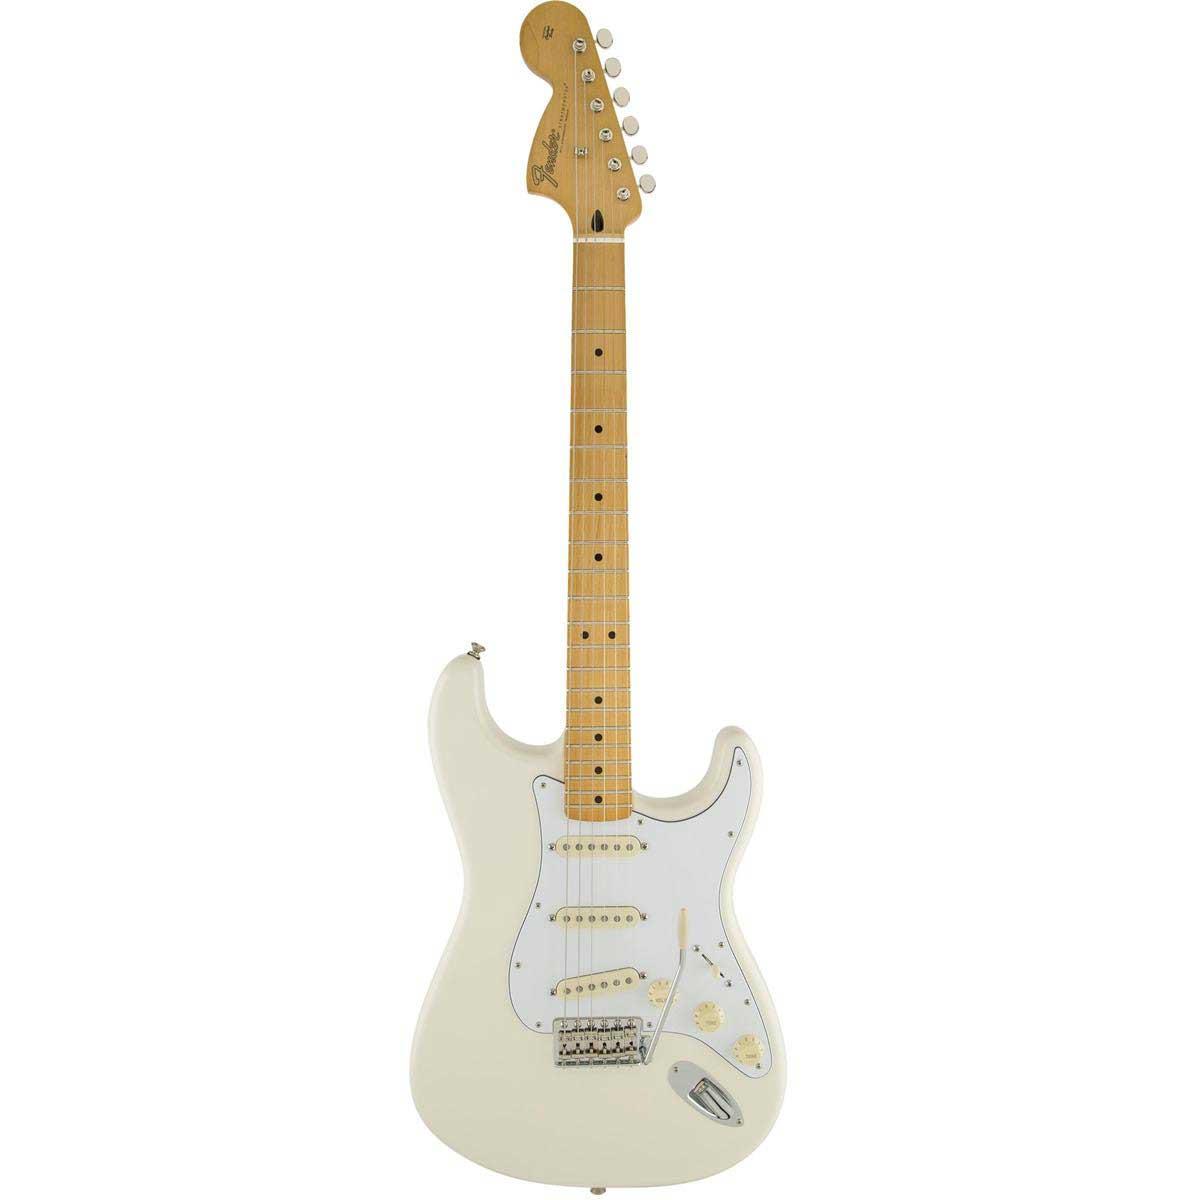 Image of Fender Jimi Hendrix Stratocaster Electric Guitar